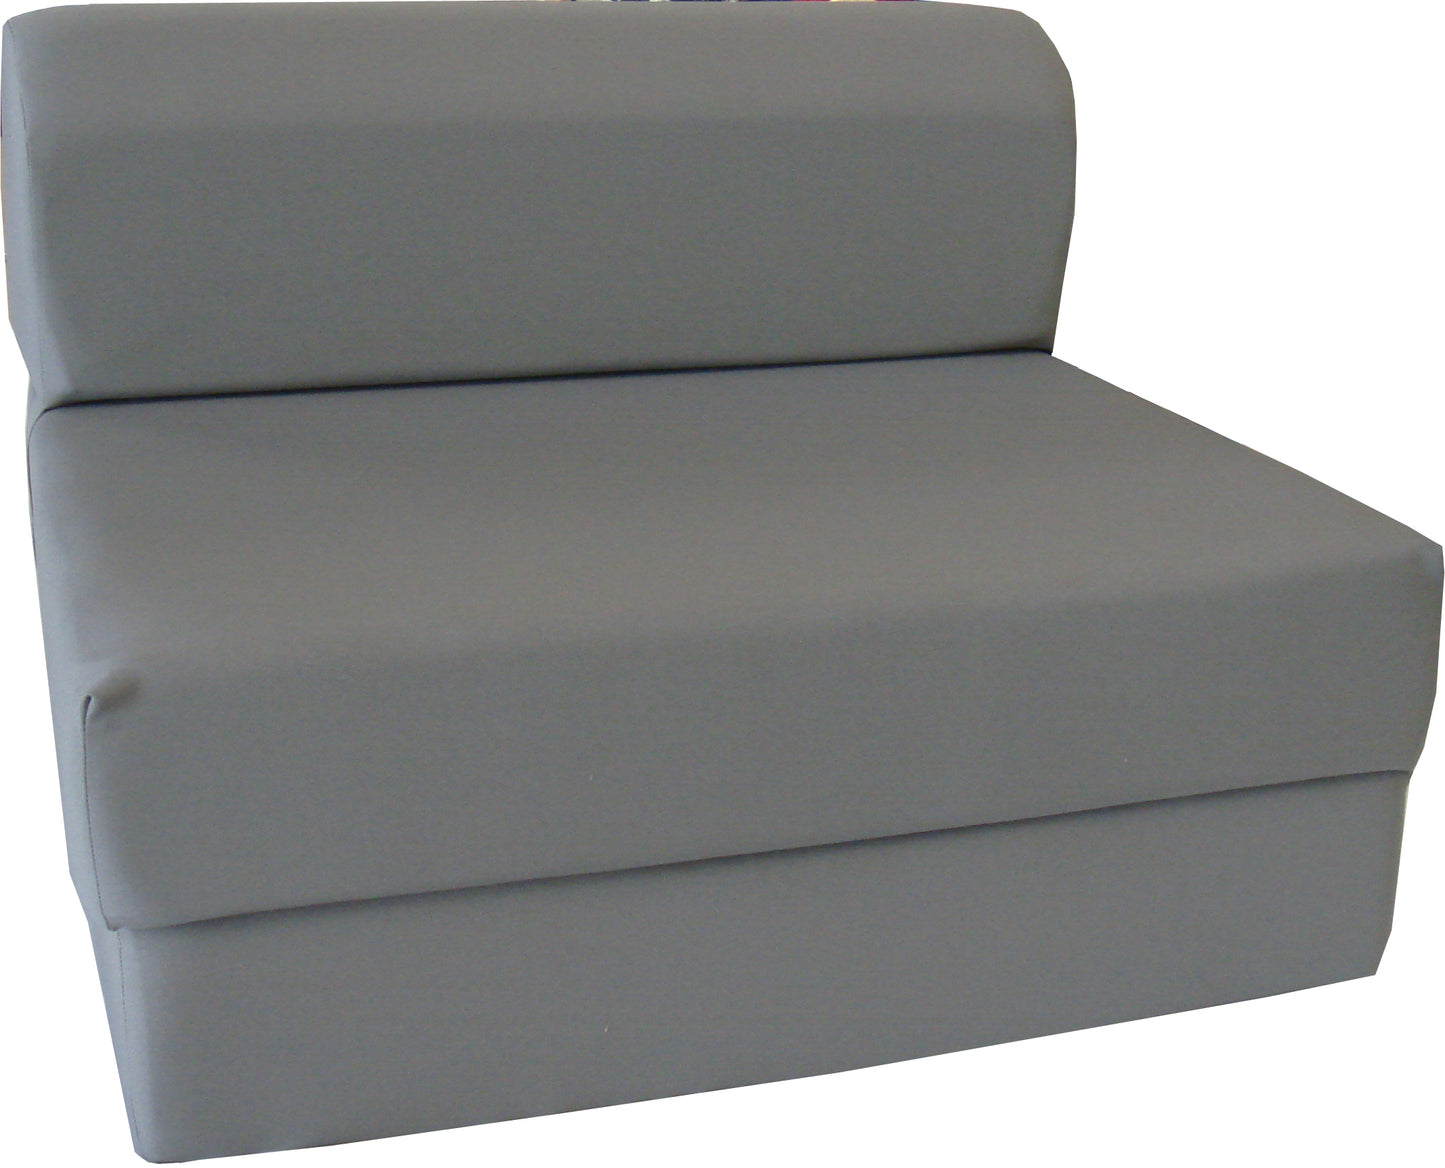 Sleeper Chair Folding foam Beds, Flip Sofa Bed, Portable Foam Mattresses